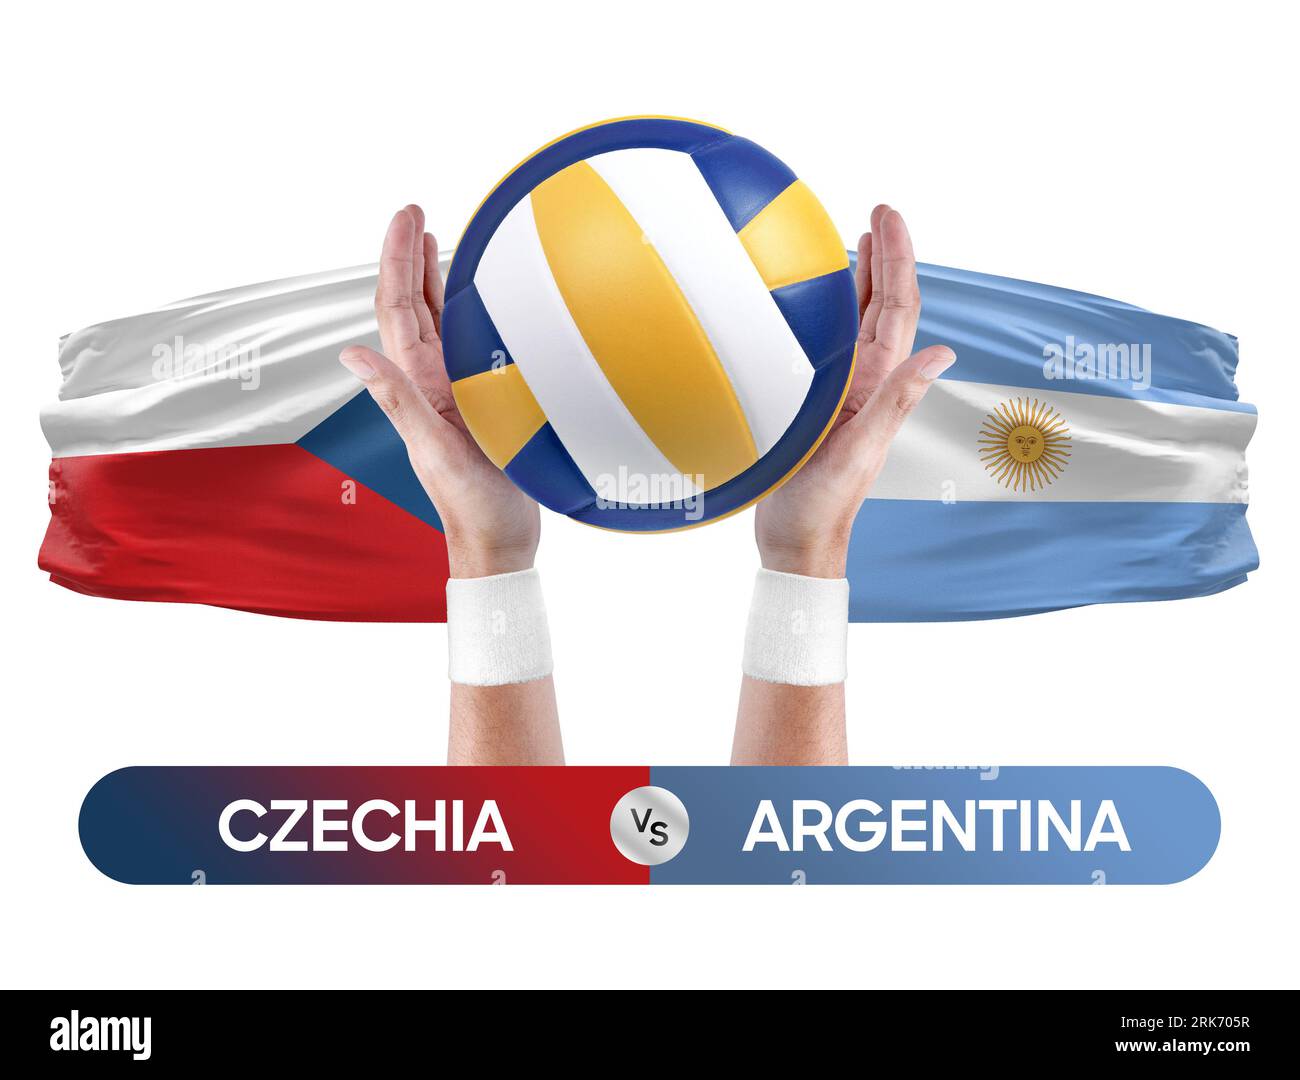 Tschechien gegen Argentinien Nationalmannschaften Volleyball Volleyball-Ball-Match-Konzept. Stockfoto